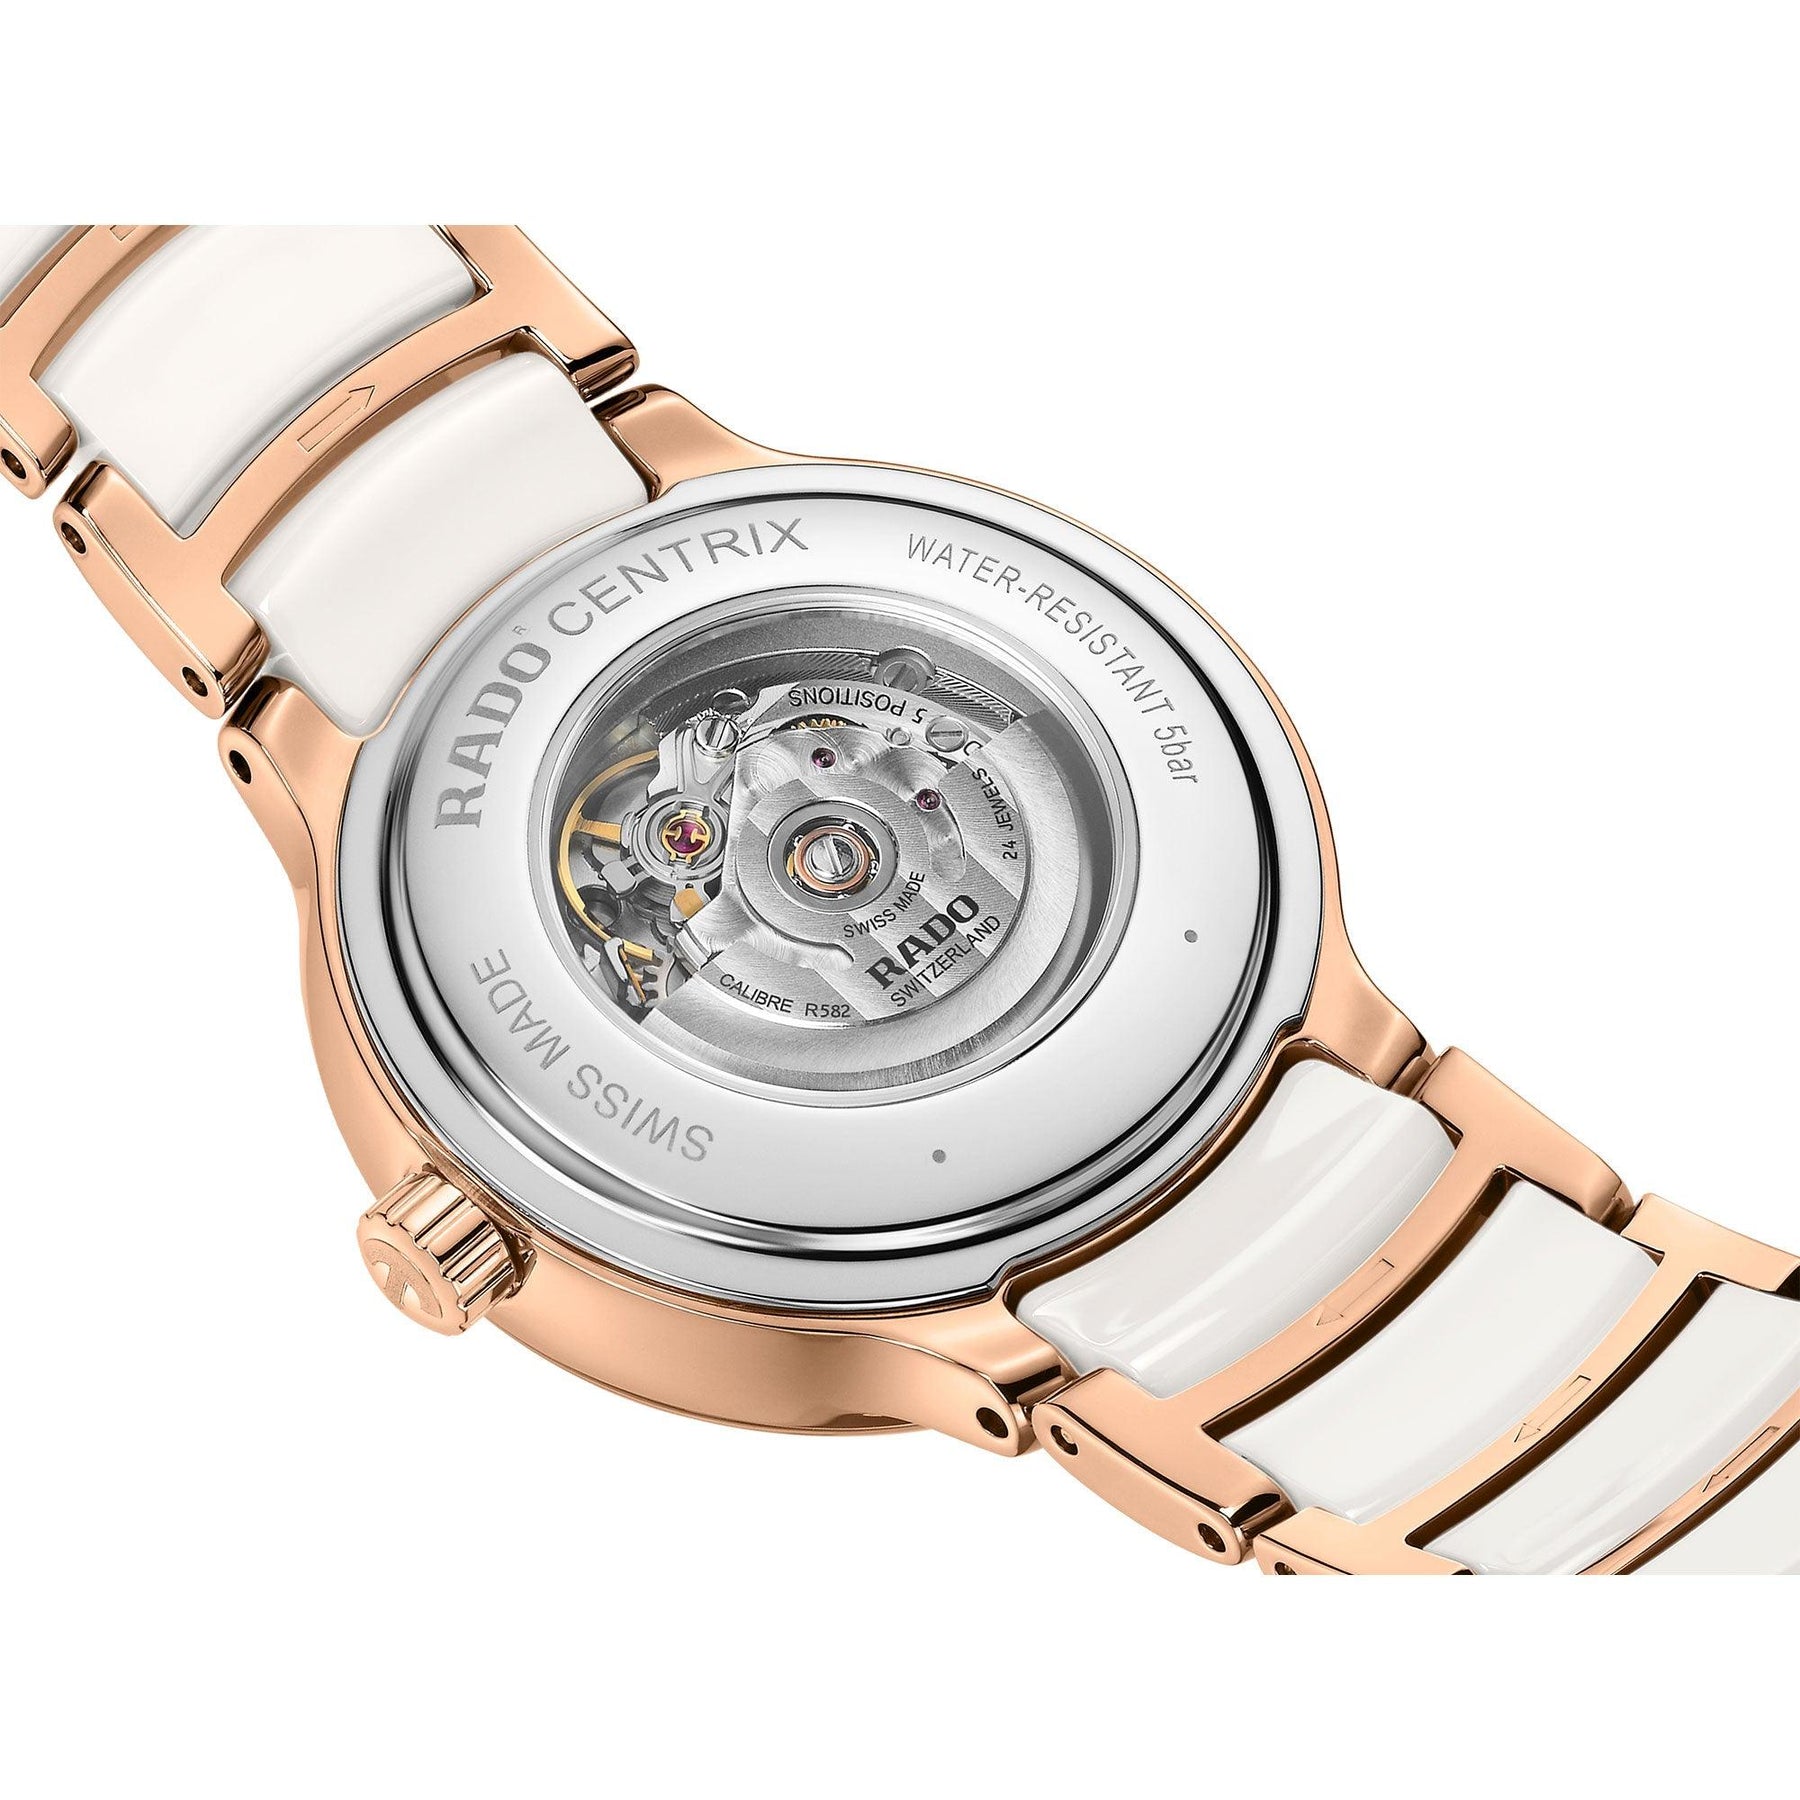 Rado Centrix Diamonds Automatic White Watch R30019744 - Wallace Bishop